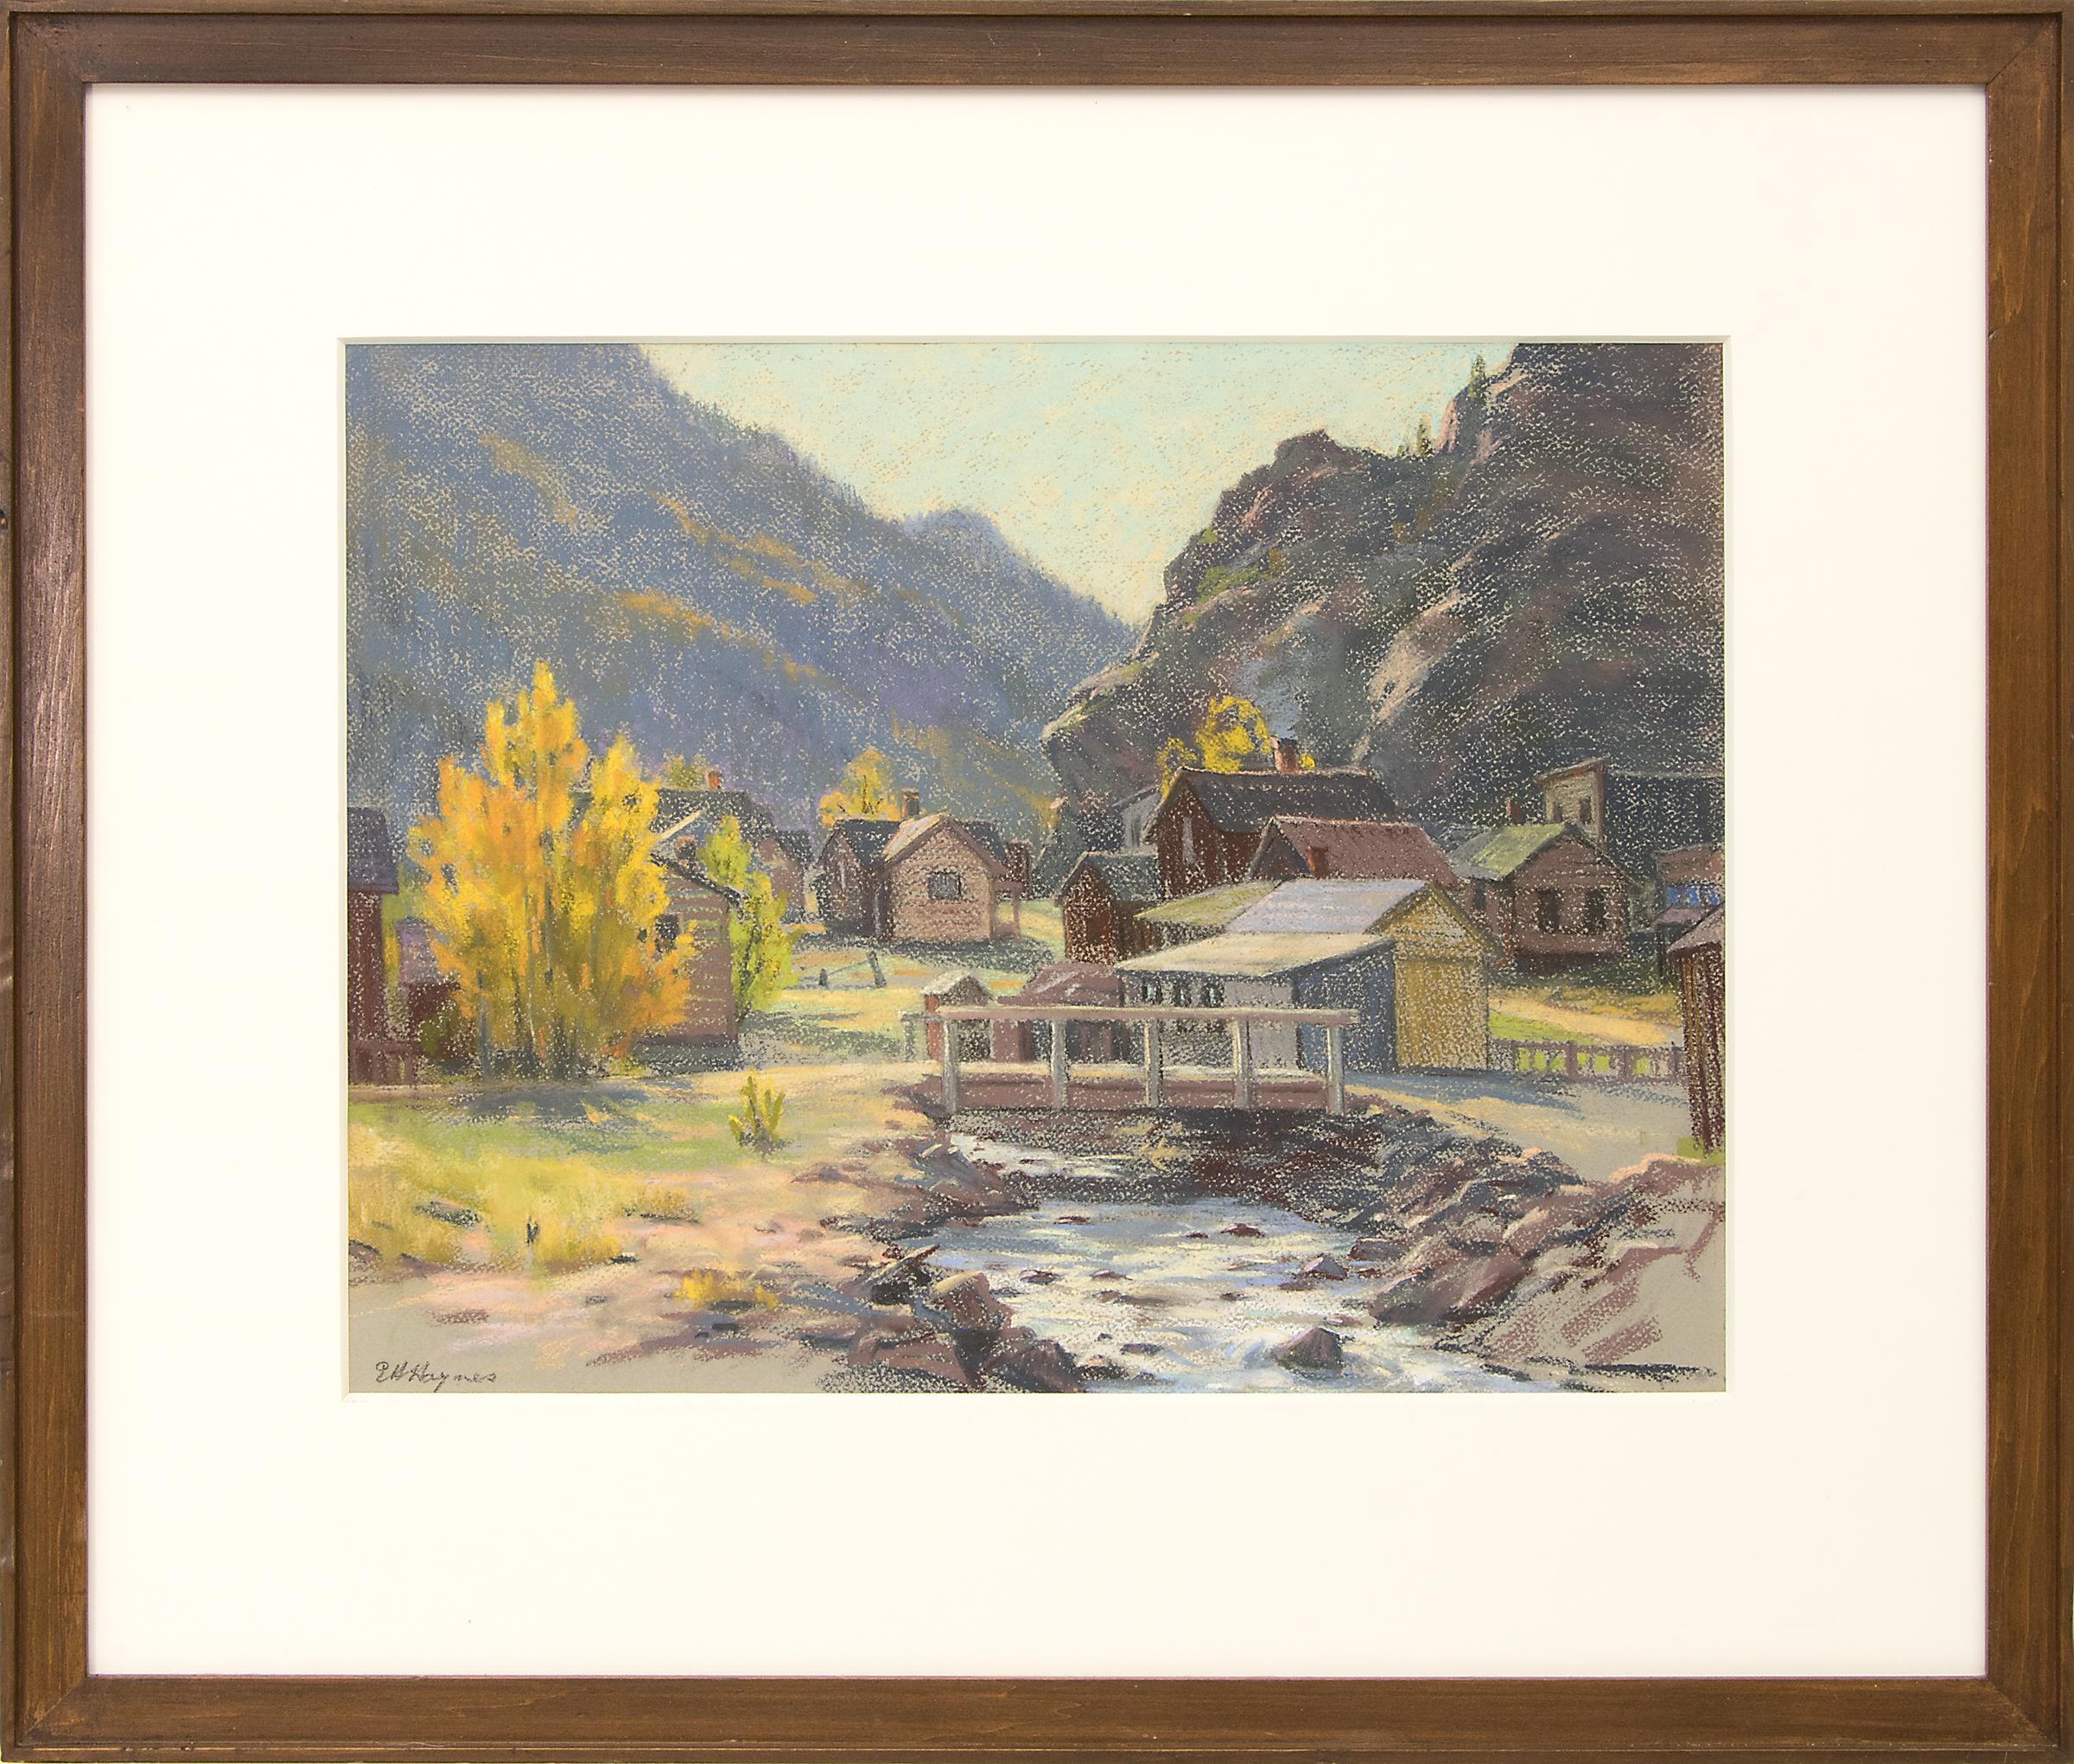 Silver Plume, Colorado, Framed Colorado Mountain Landscape Oil Pastel Drawing